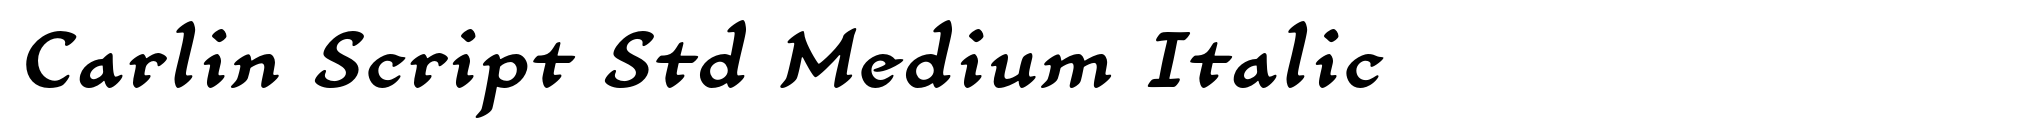 Carlin Script Std Medium Italic image